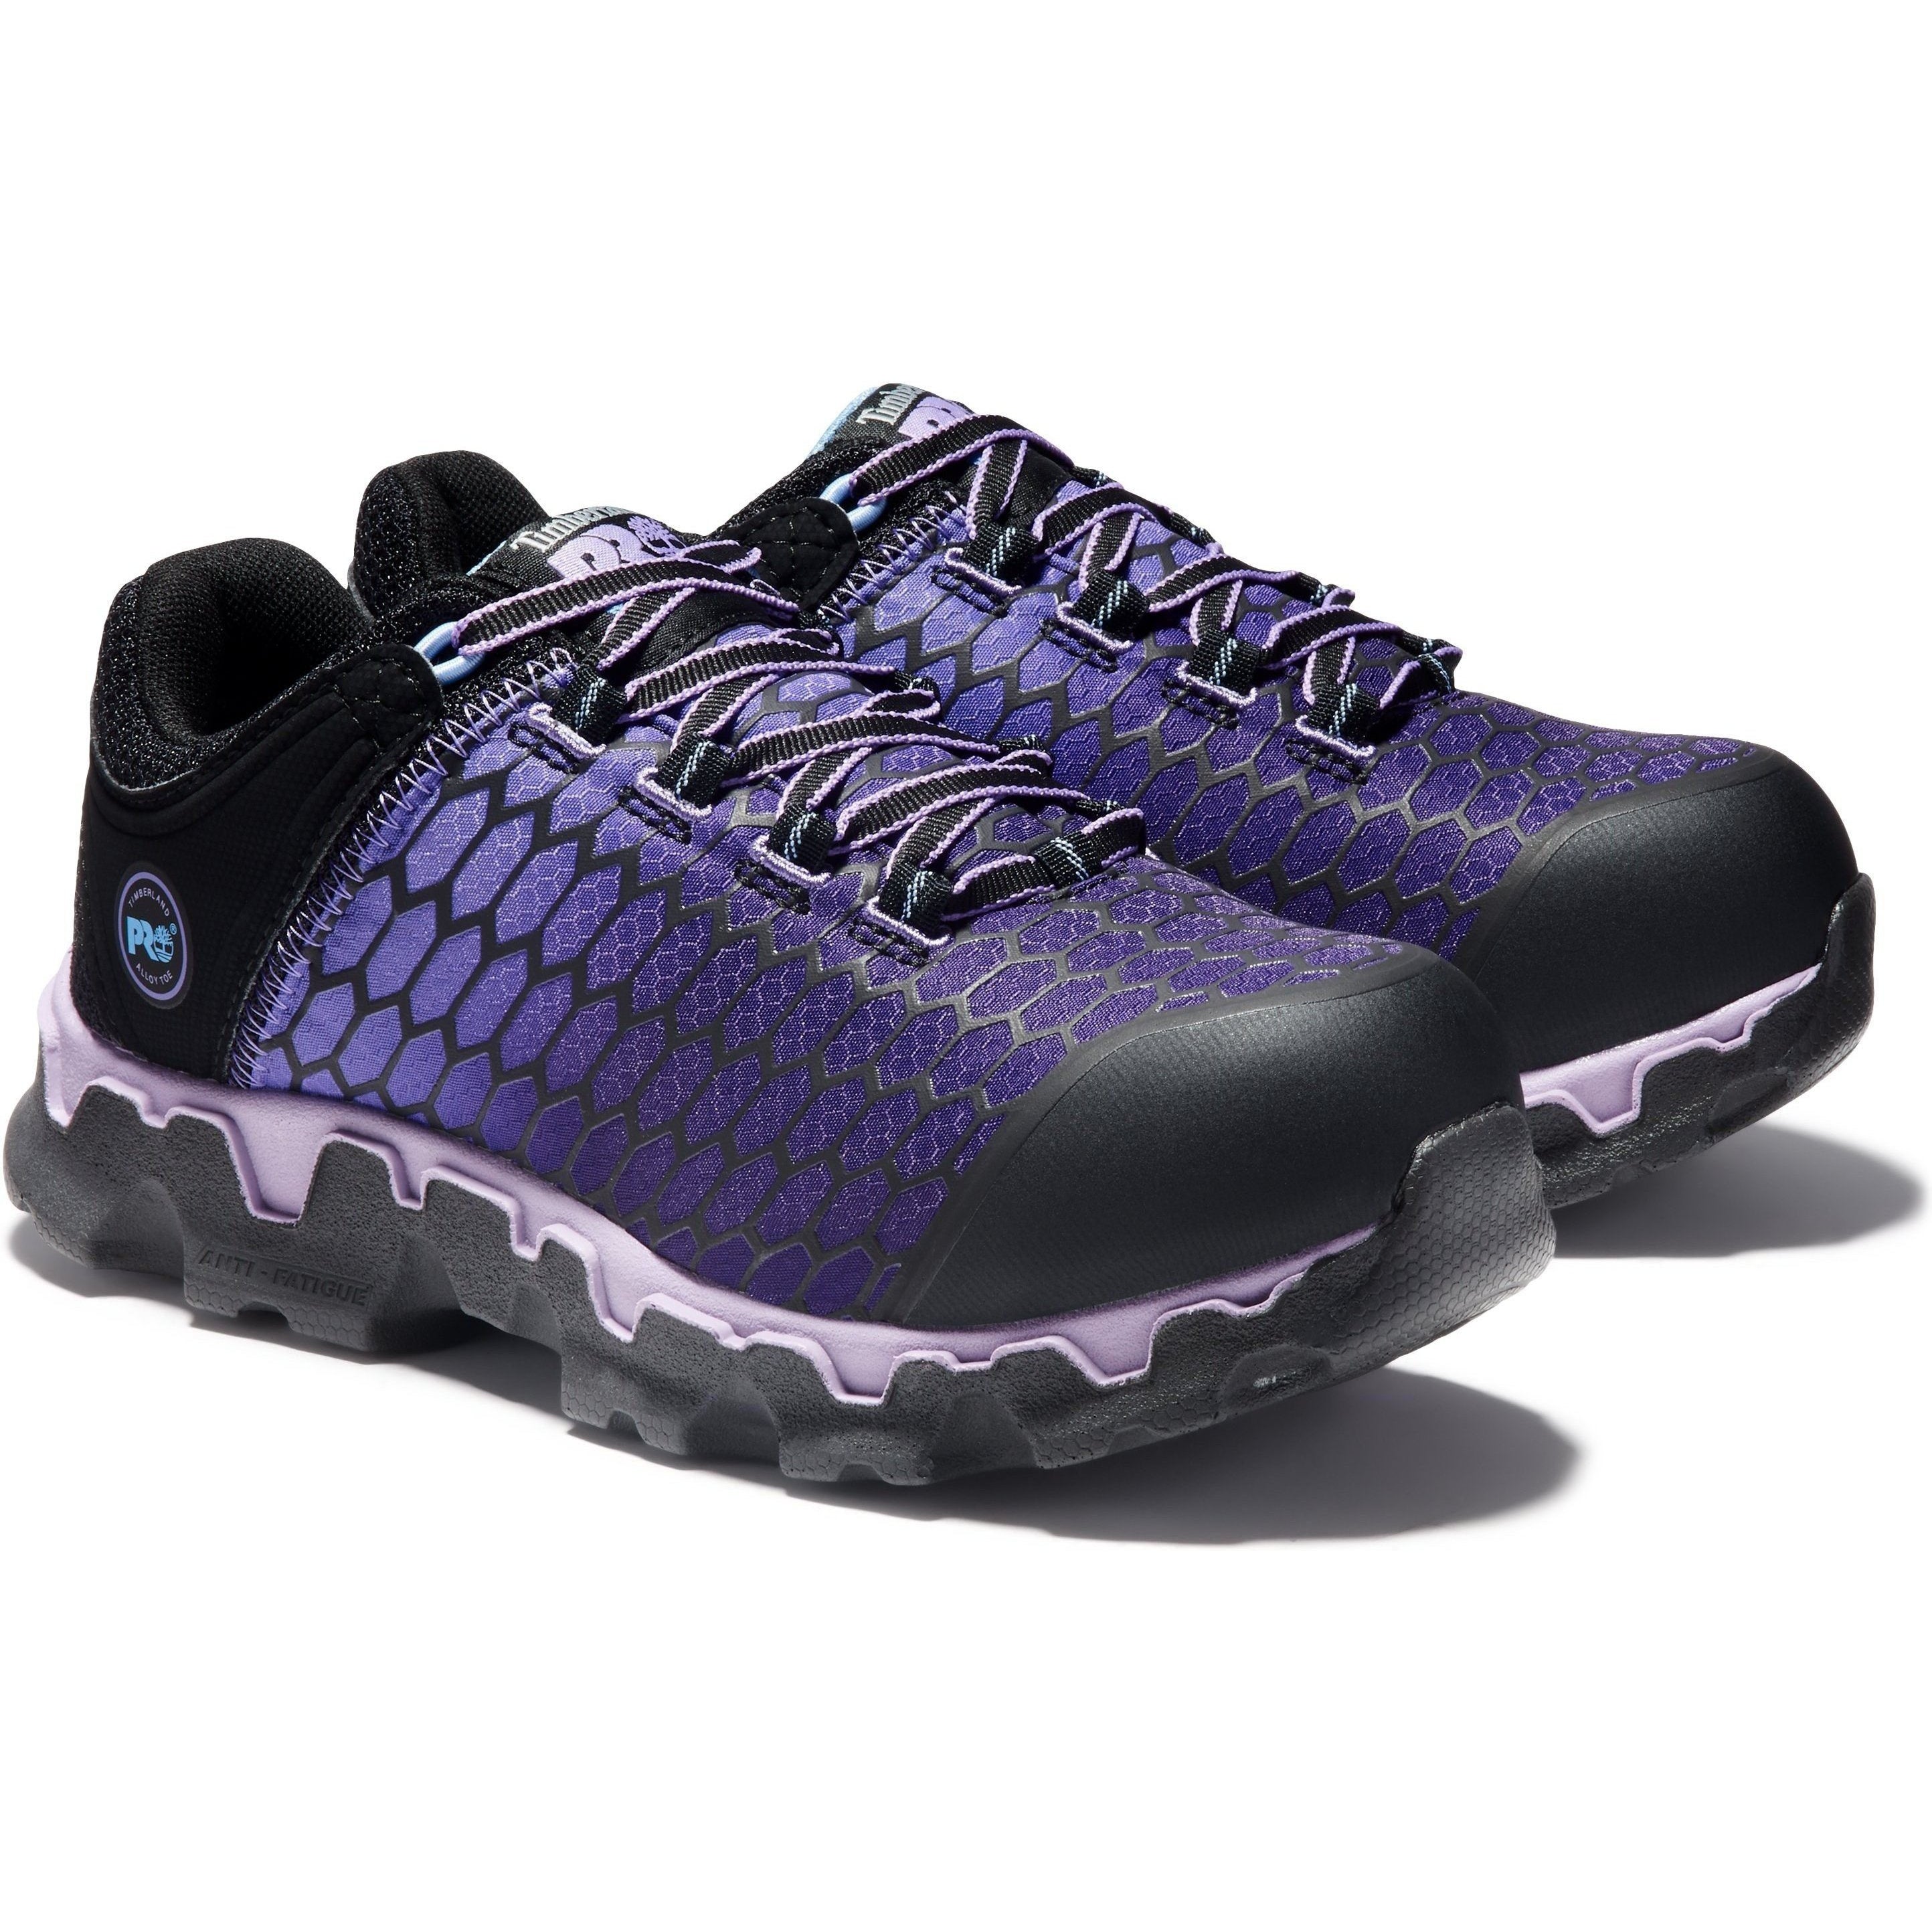 Timberland PRO Women's Powertrain Alloy Toe Work Shoe - TB0A1H1S001 5.5 / Medium / Black/Purple - Overlook Boots